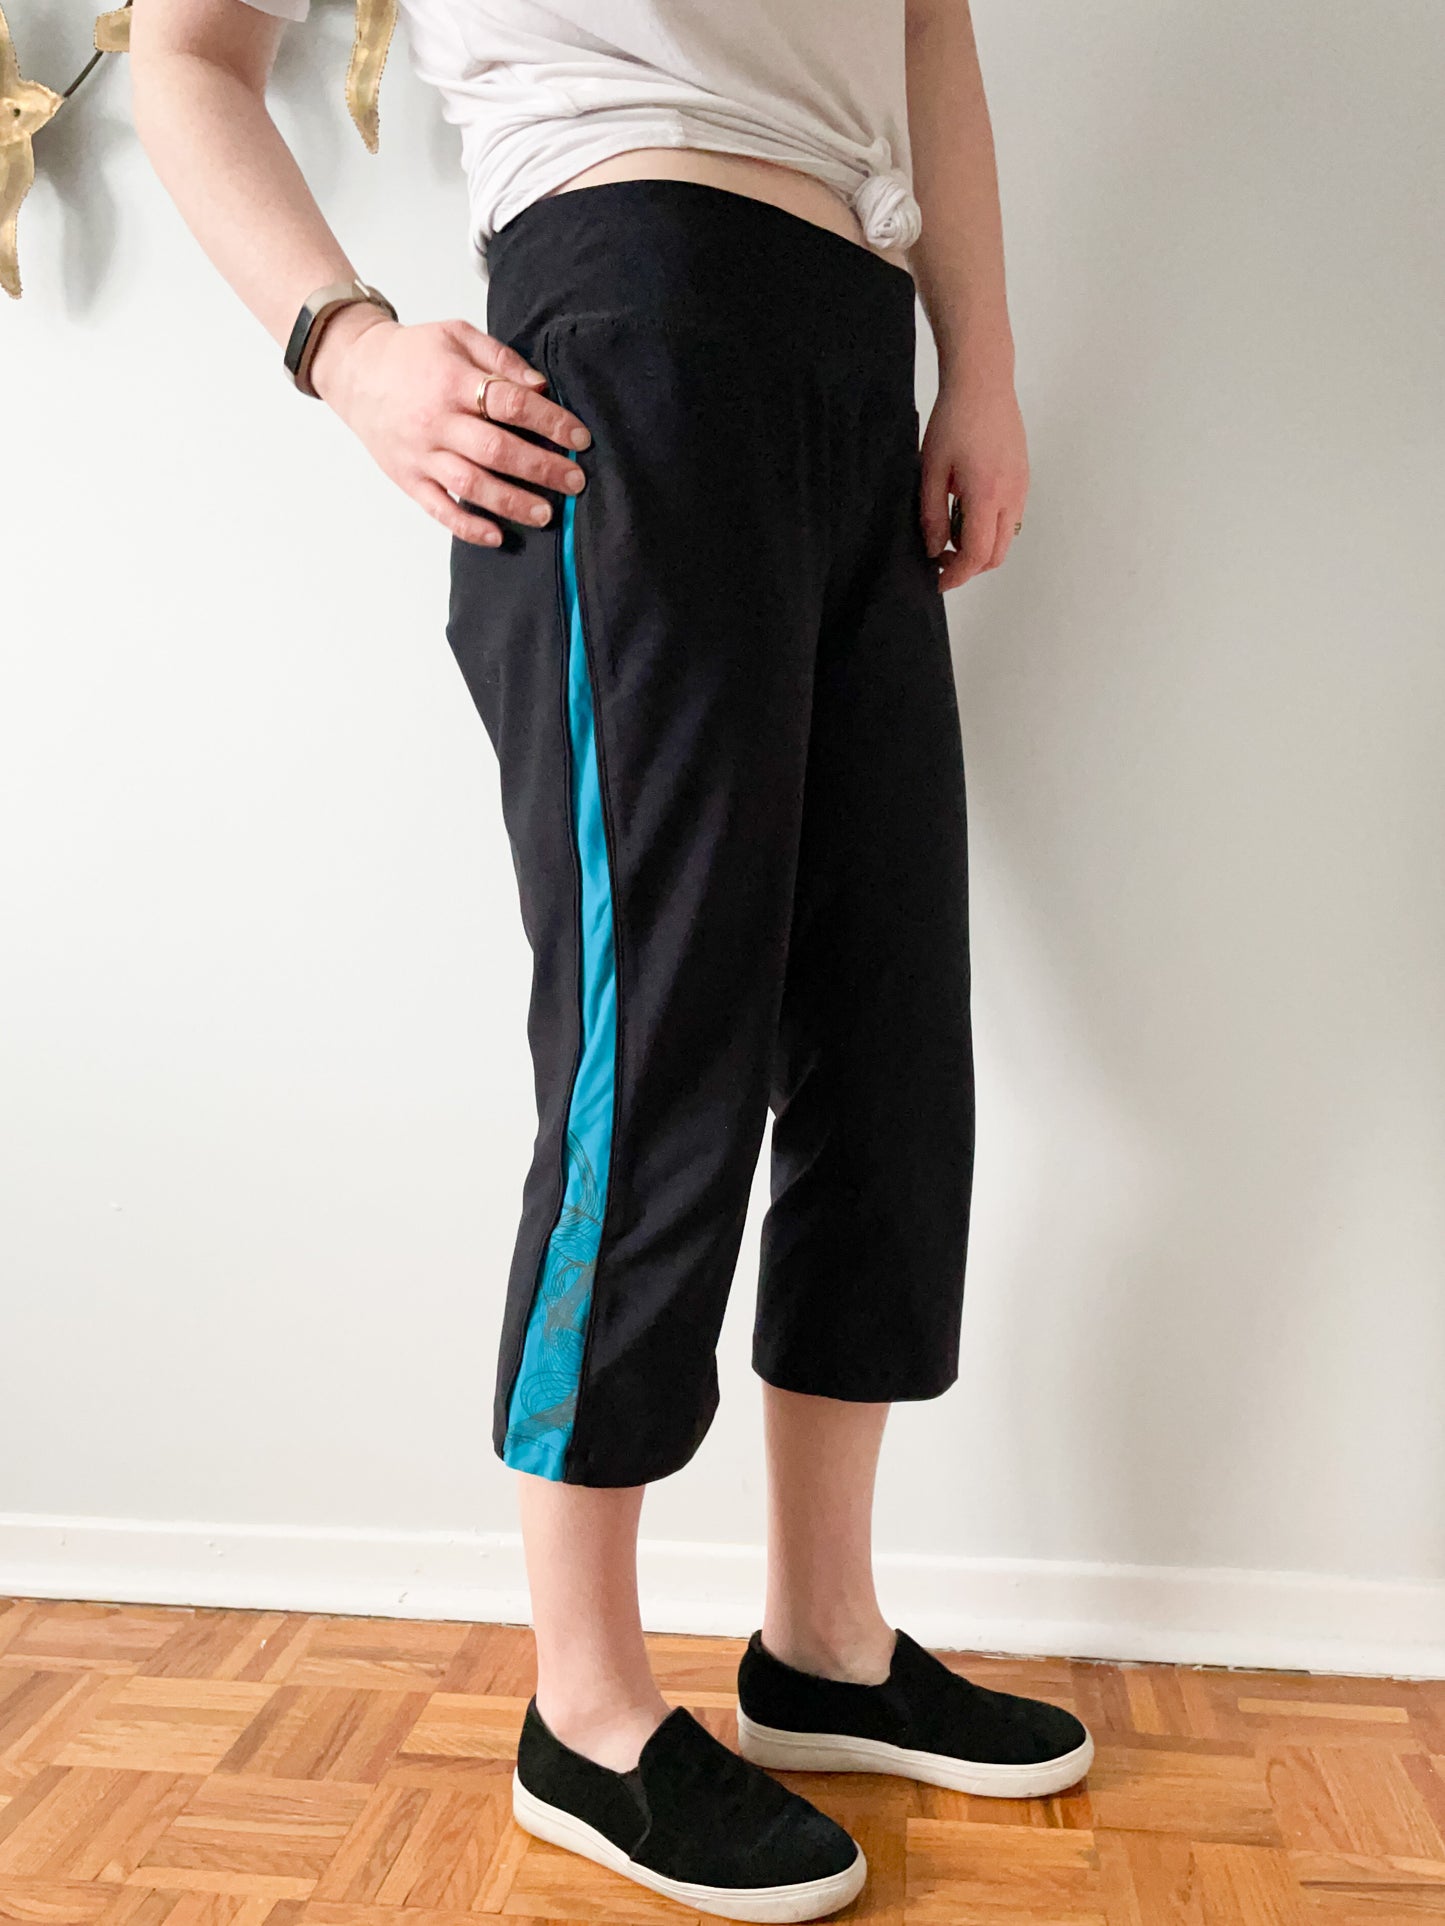 Fila Navy Blue Cropped Workout Pants - Large